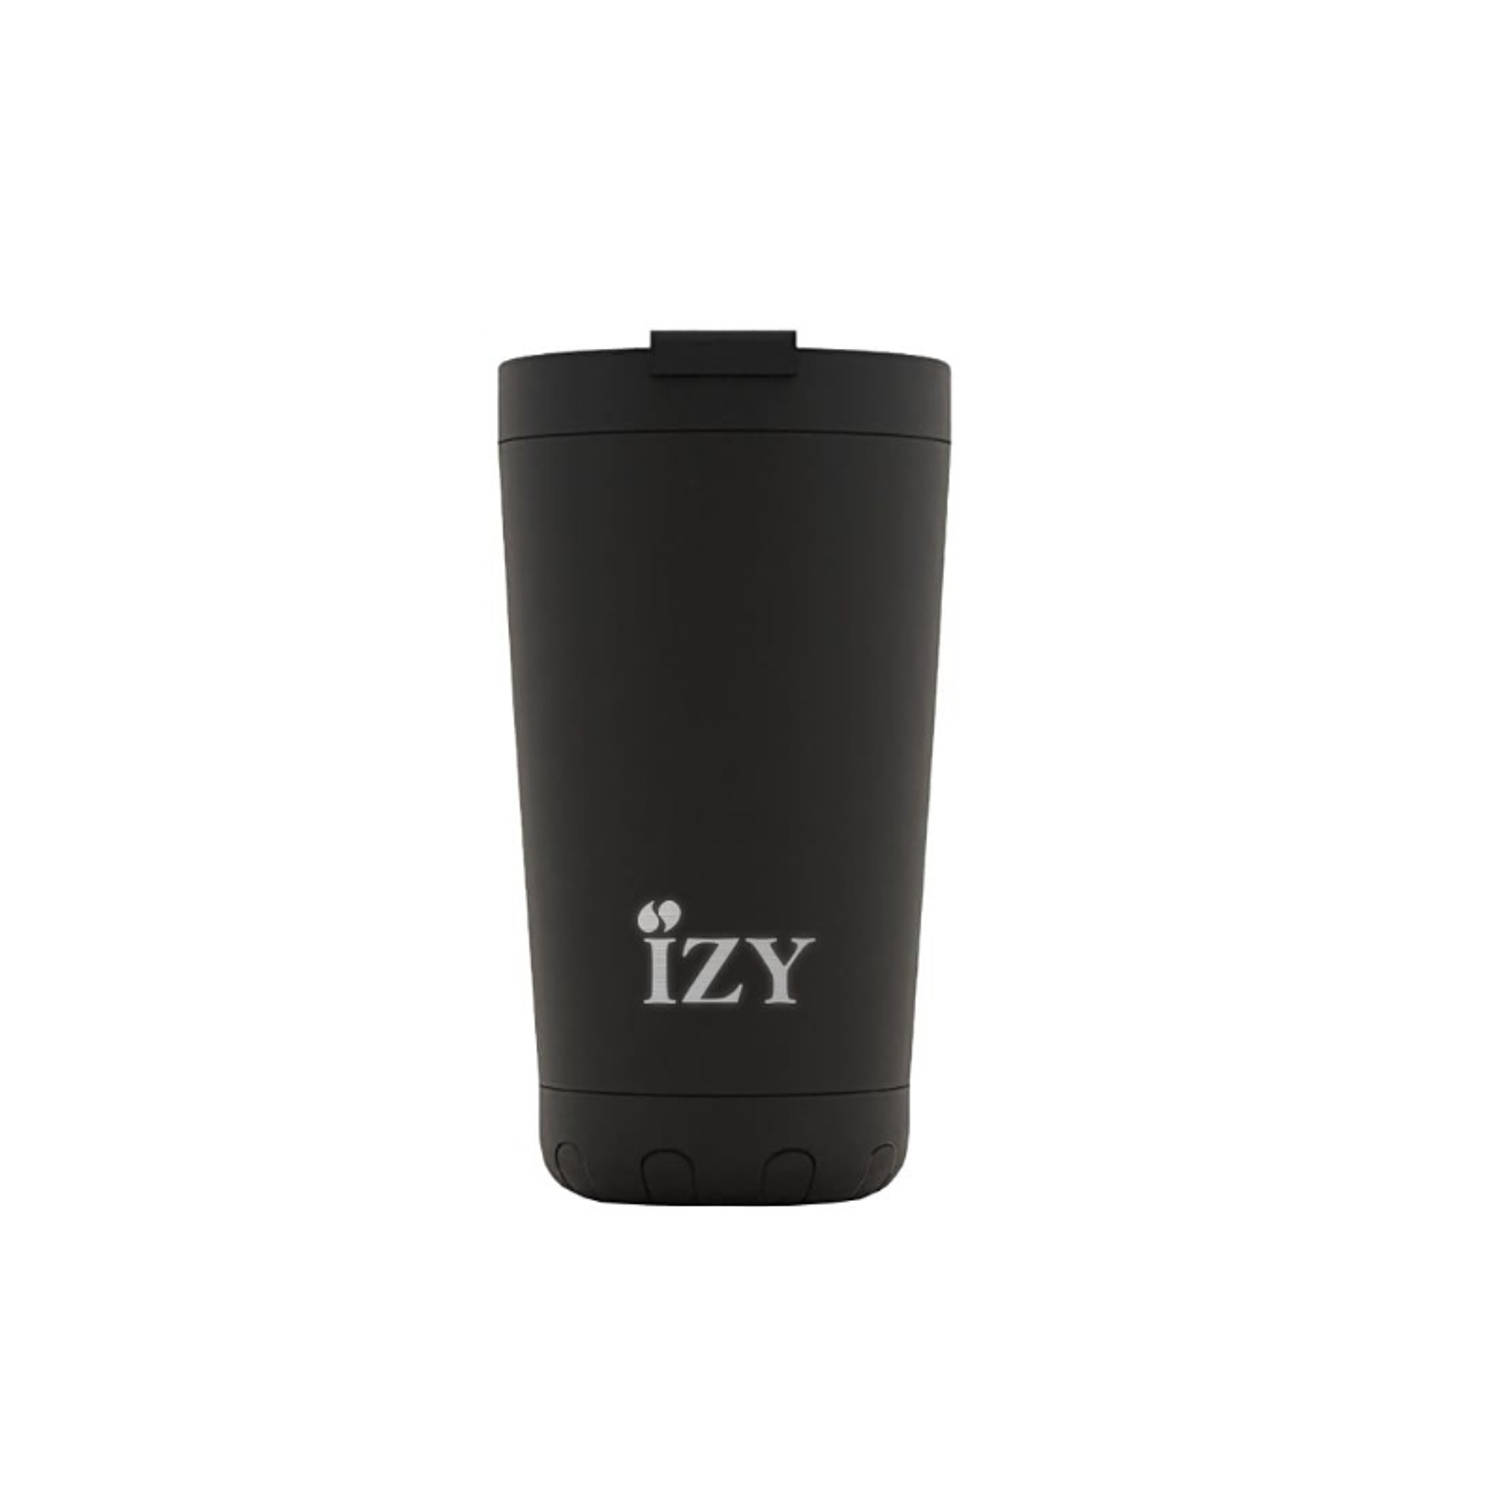 IZY x Zwart Thermosbeker - Koffiebeker to go - 350 ml - Drinkbeker RVS - Travel Mug - Reisbeker